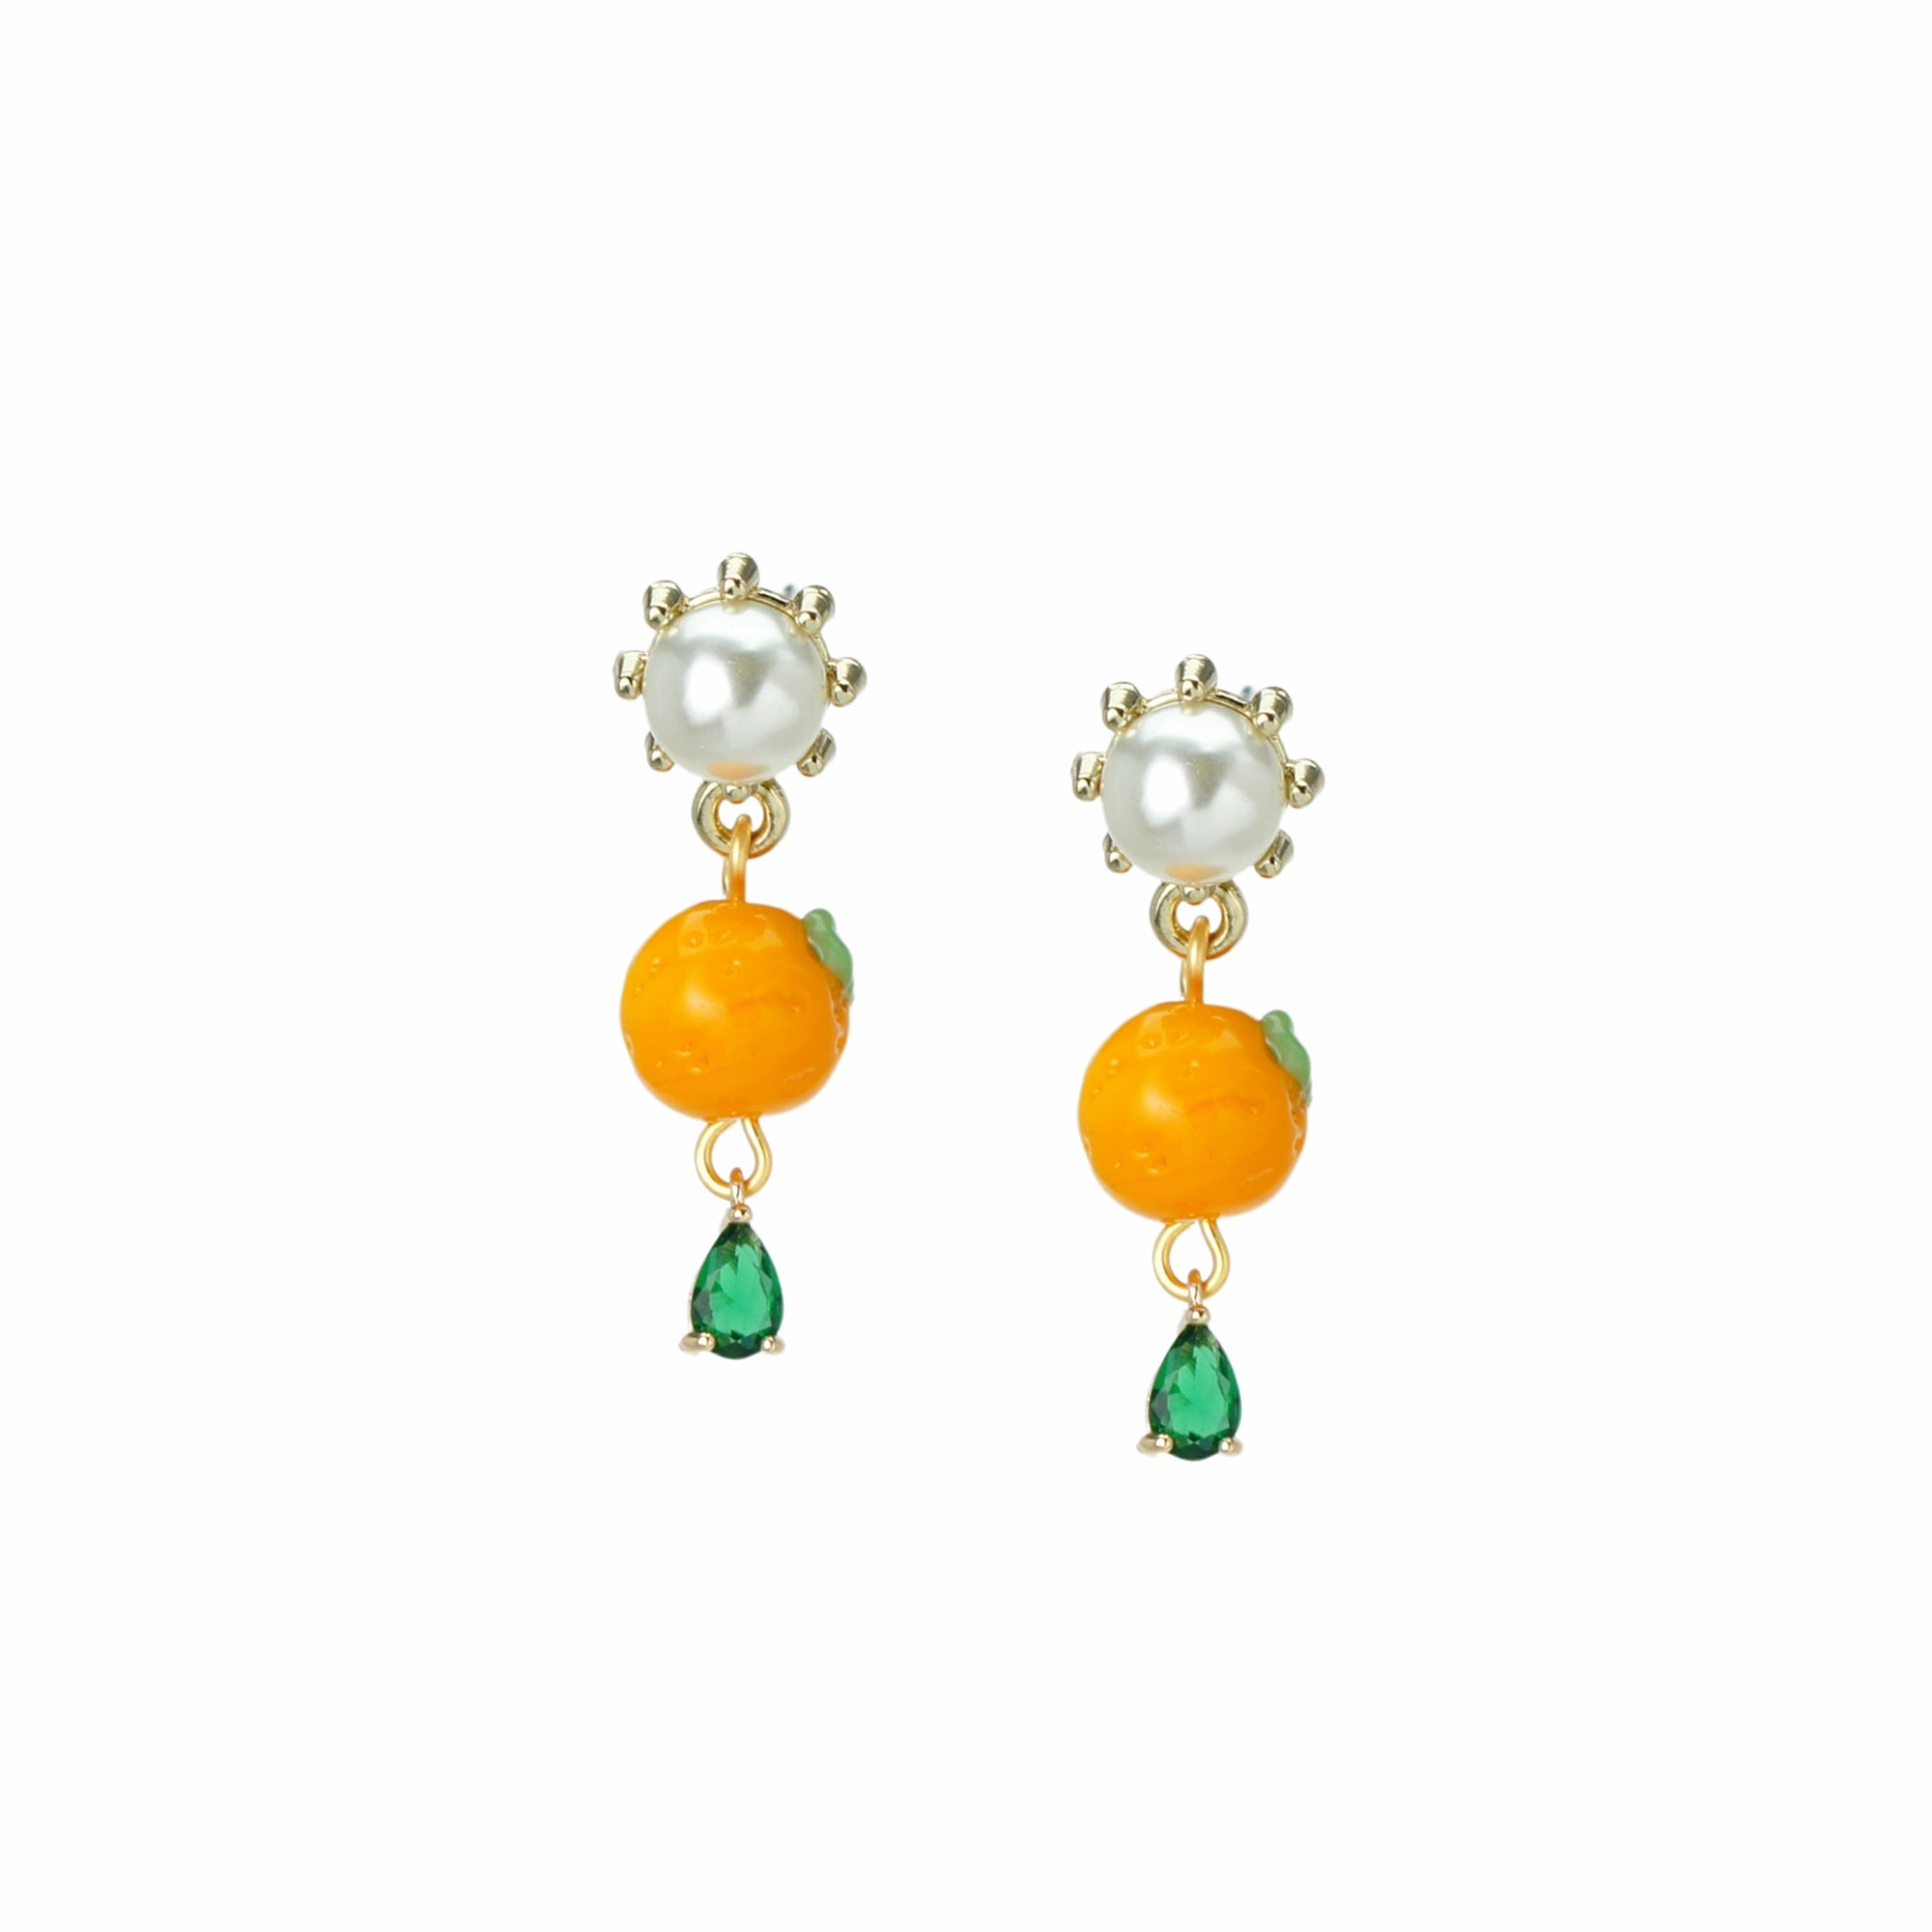 Cutie Pie Lampwork Glass Tangerine and Crystal Drop Earrings with Pearl Studs